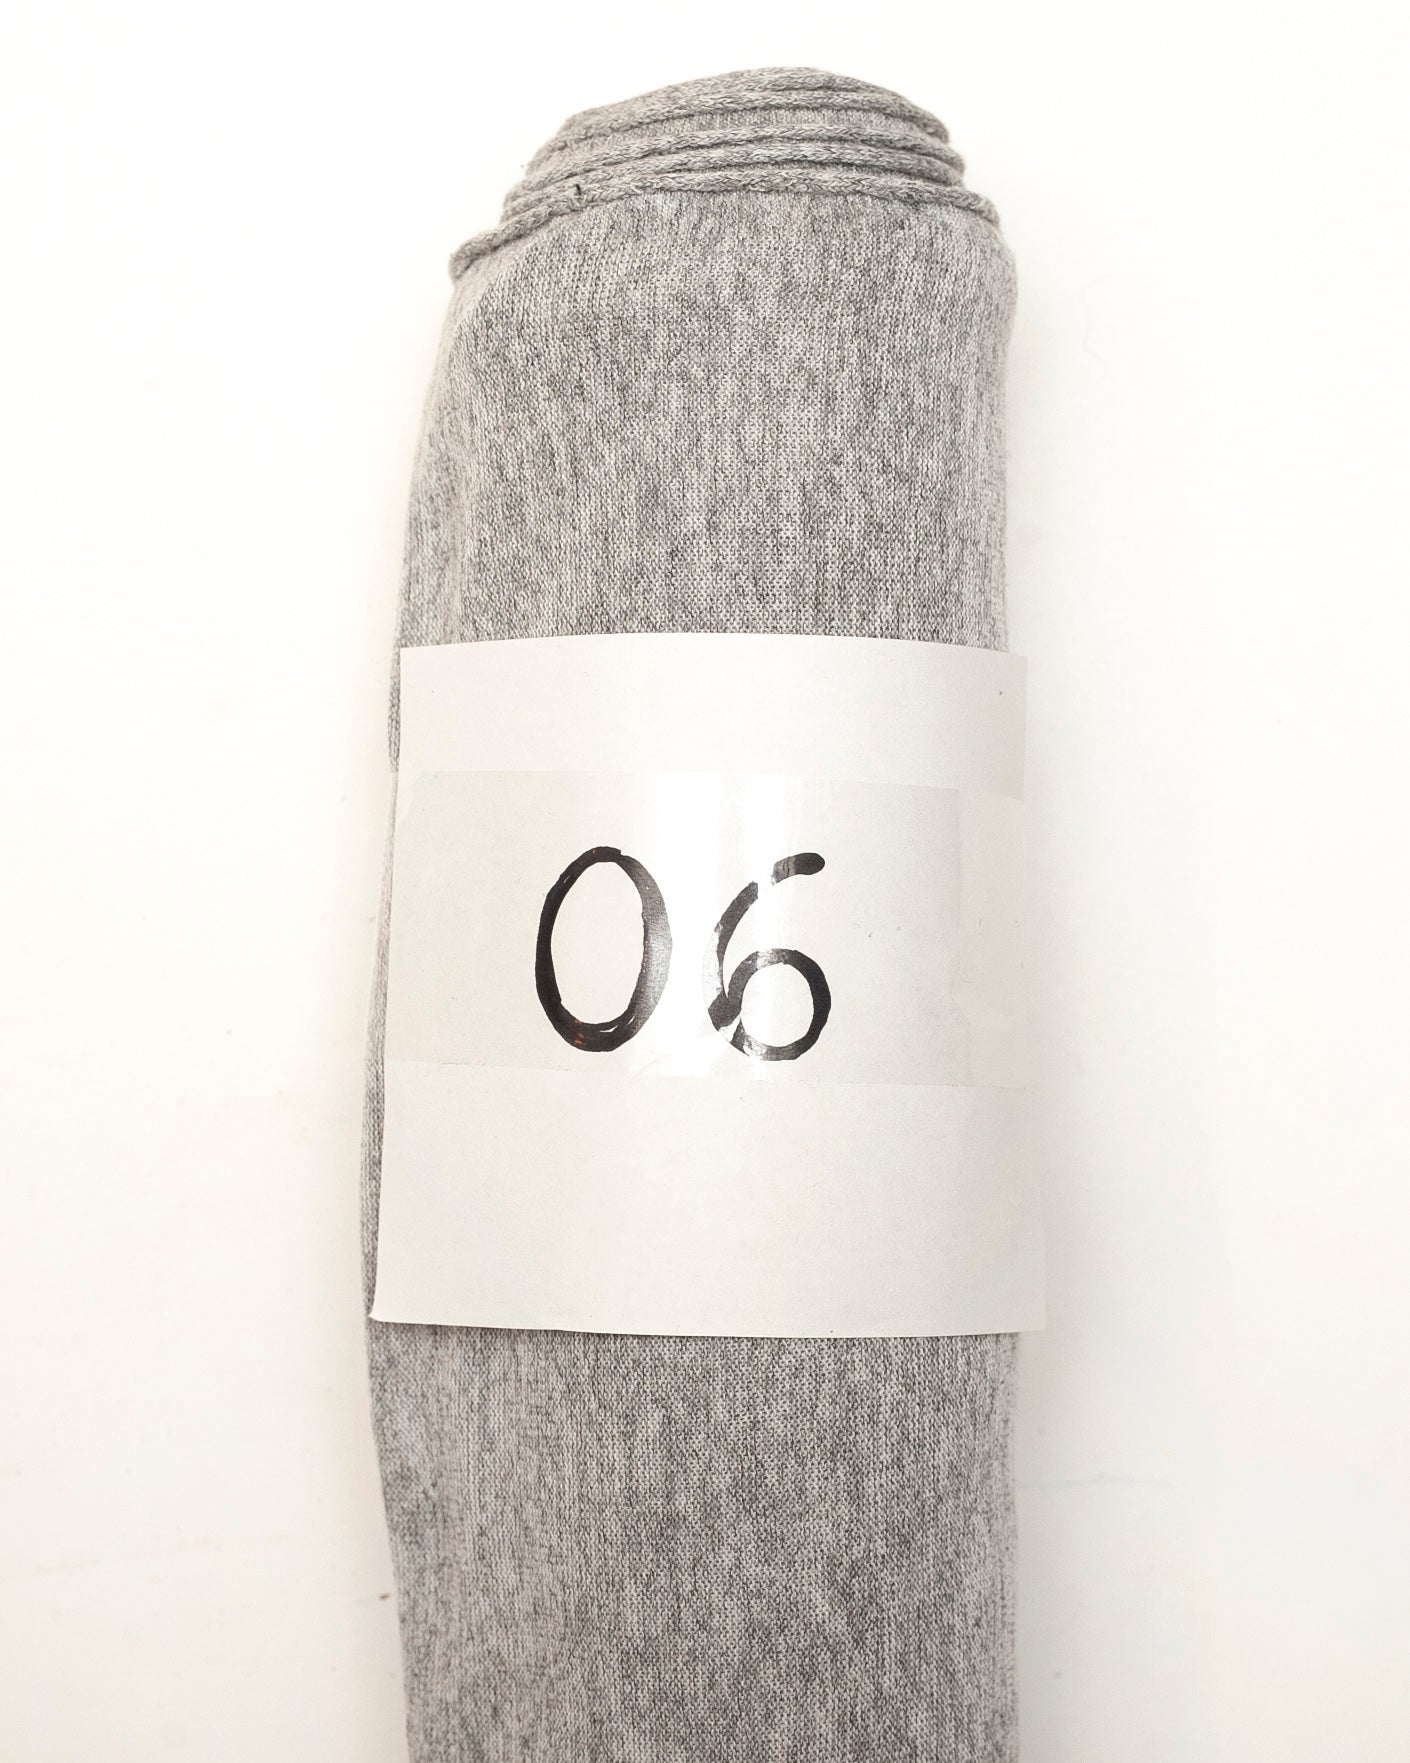 Fabric | Light Grey Melange Knit